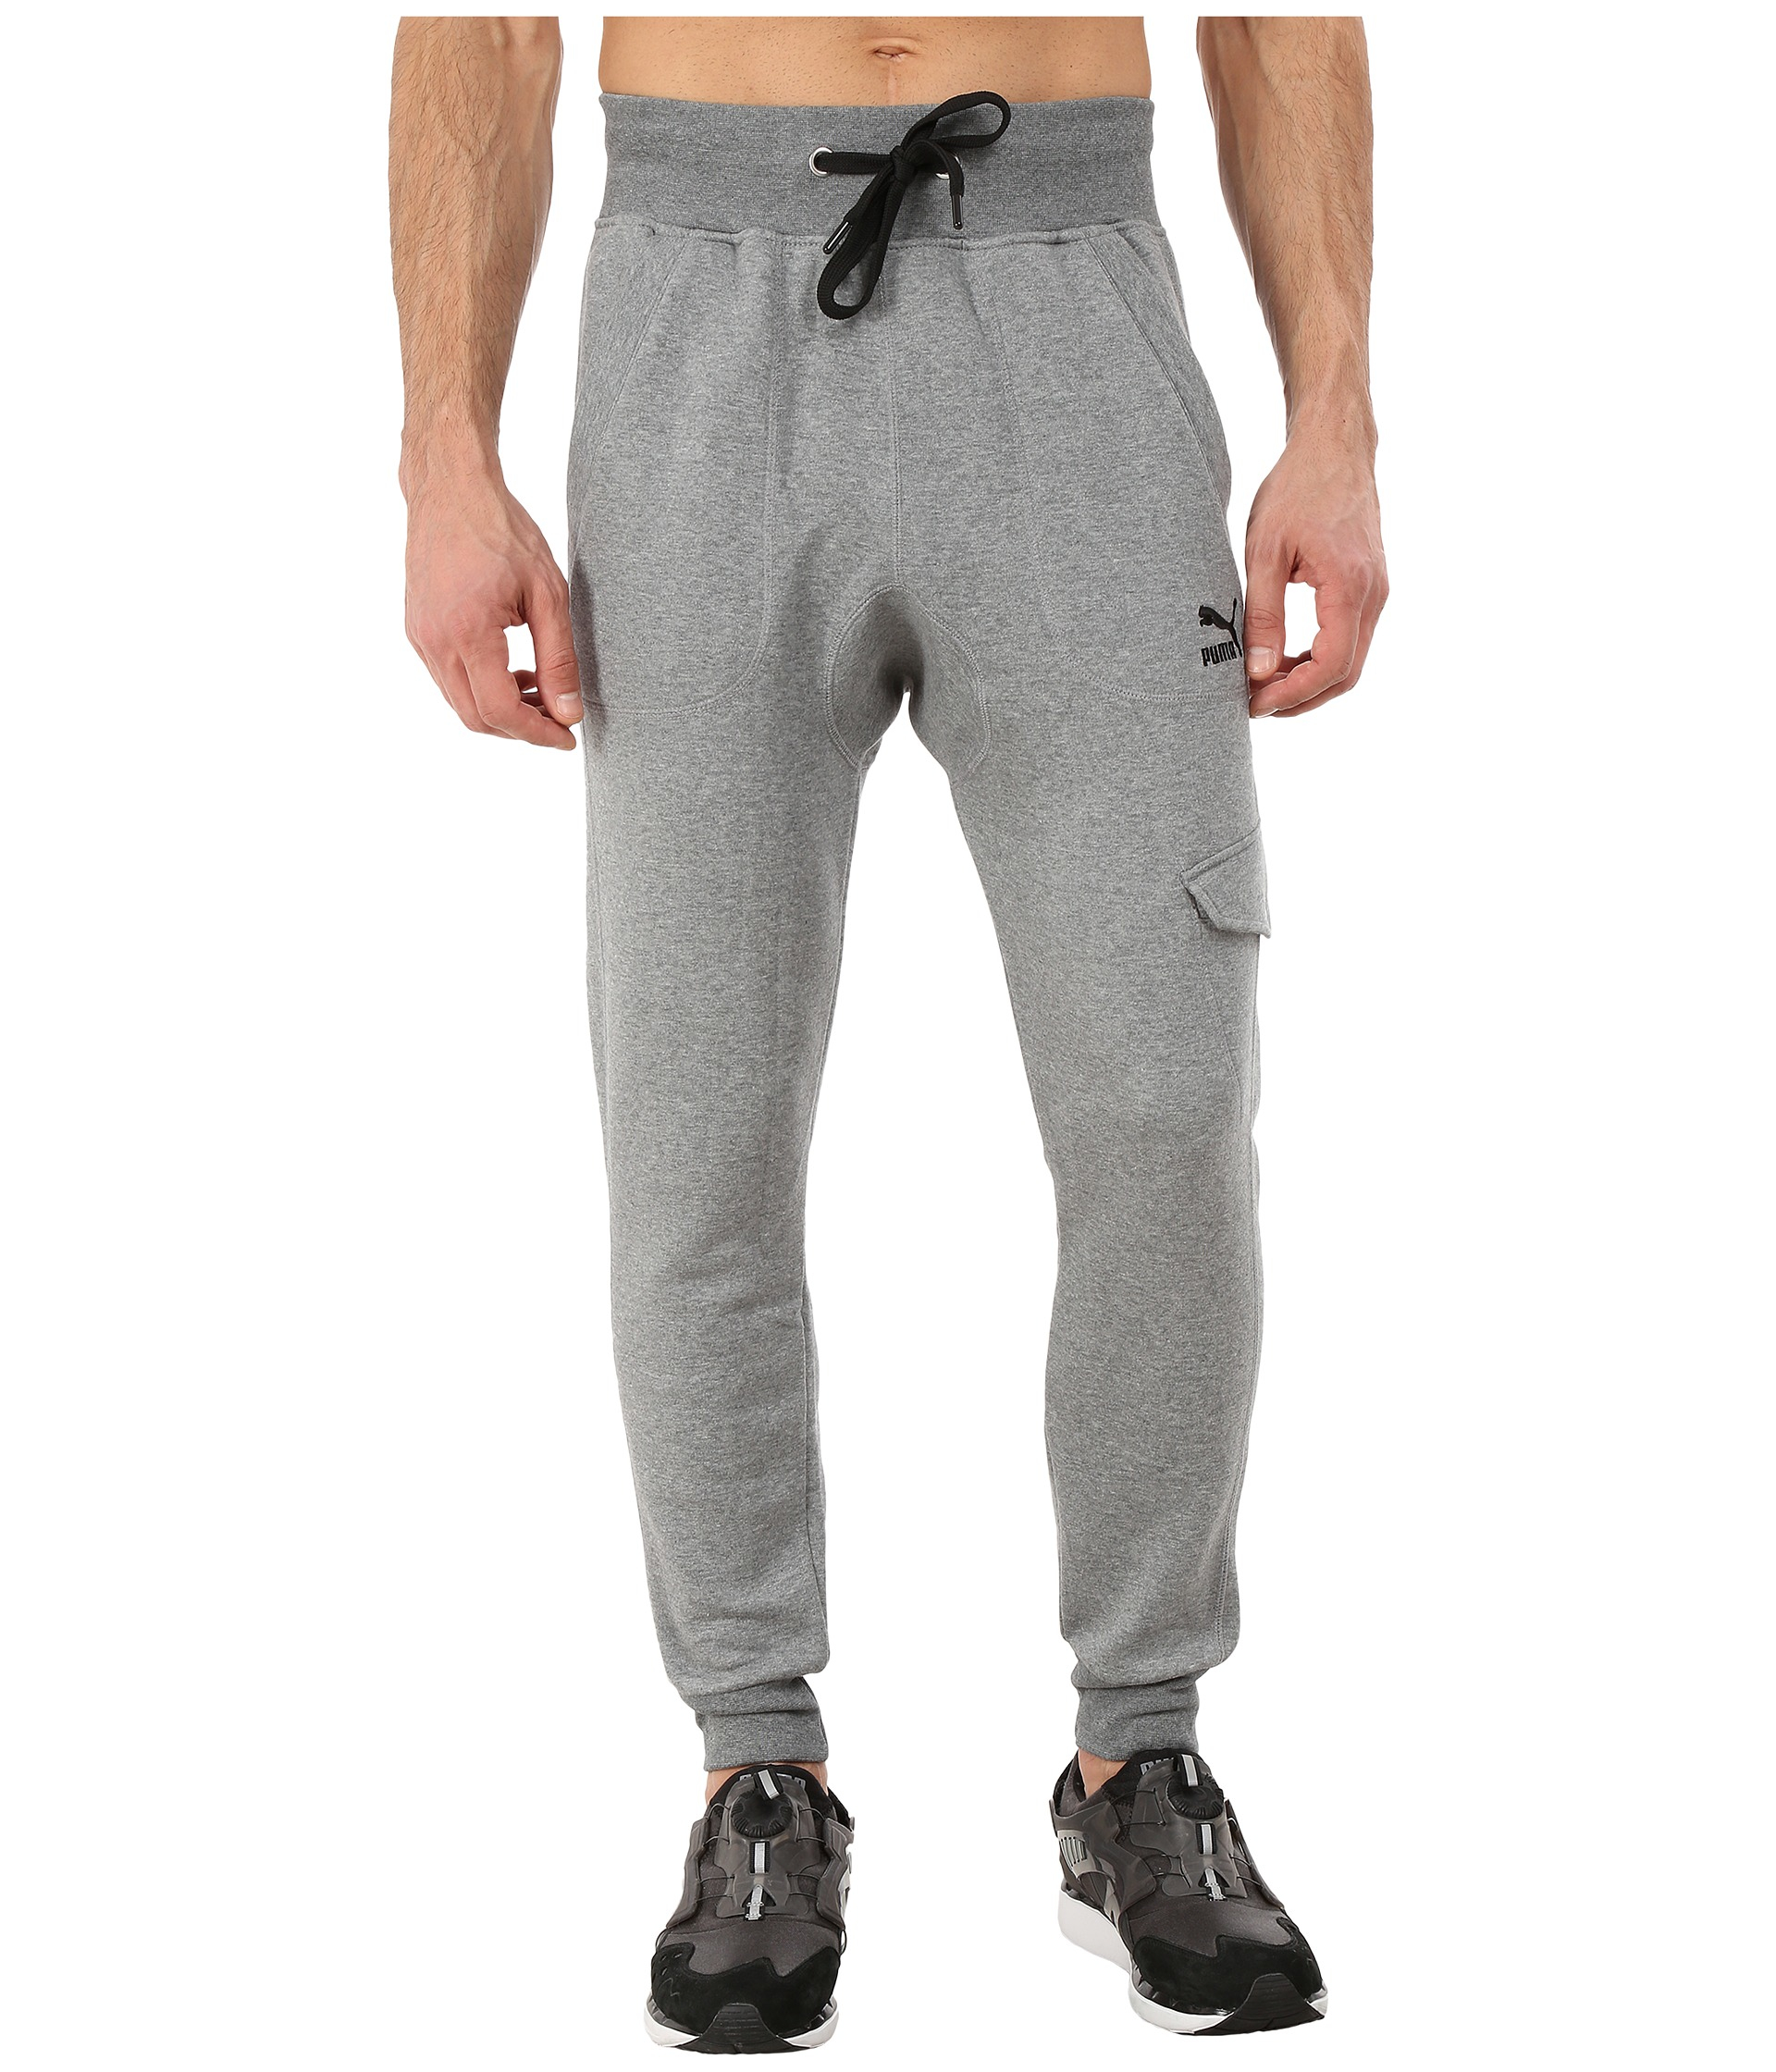 Lyst - Puma Cargo Sweat Pants in Gray for Men